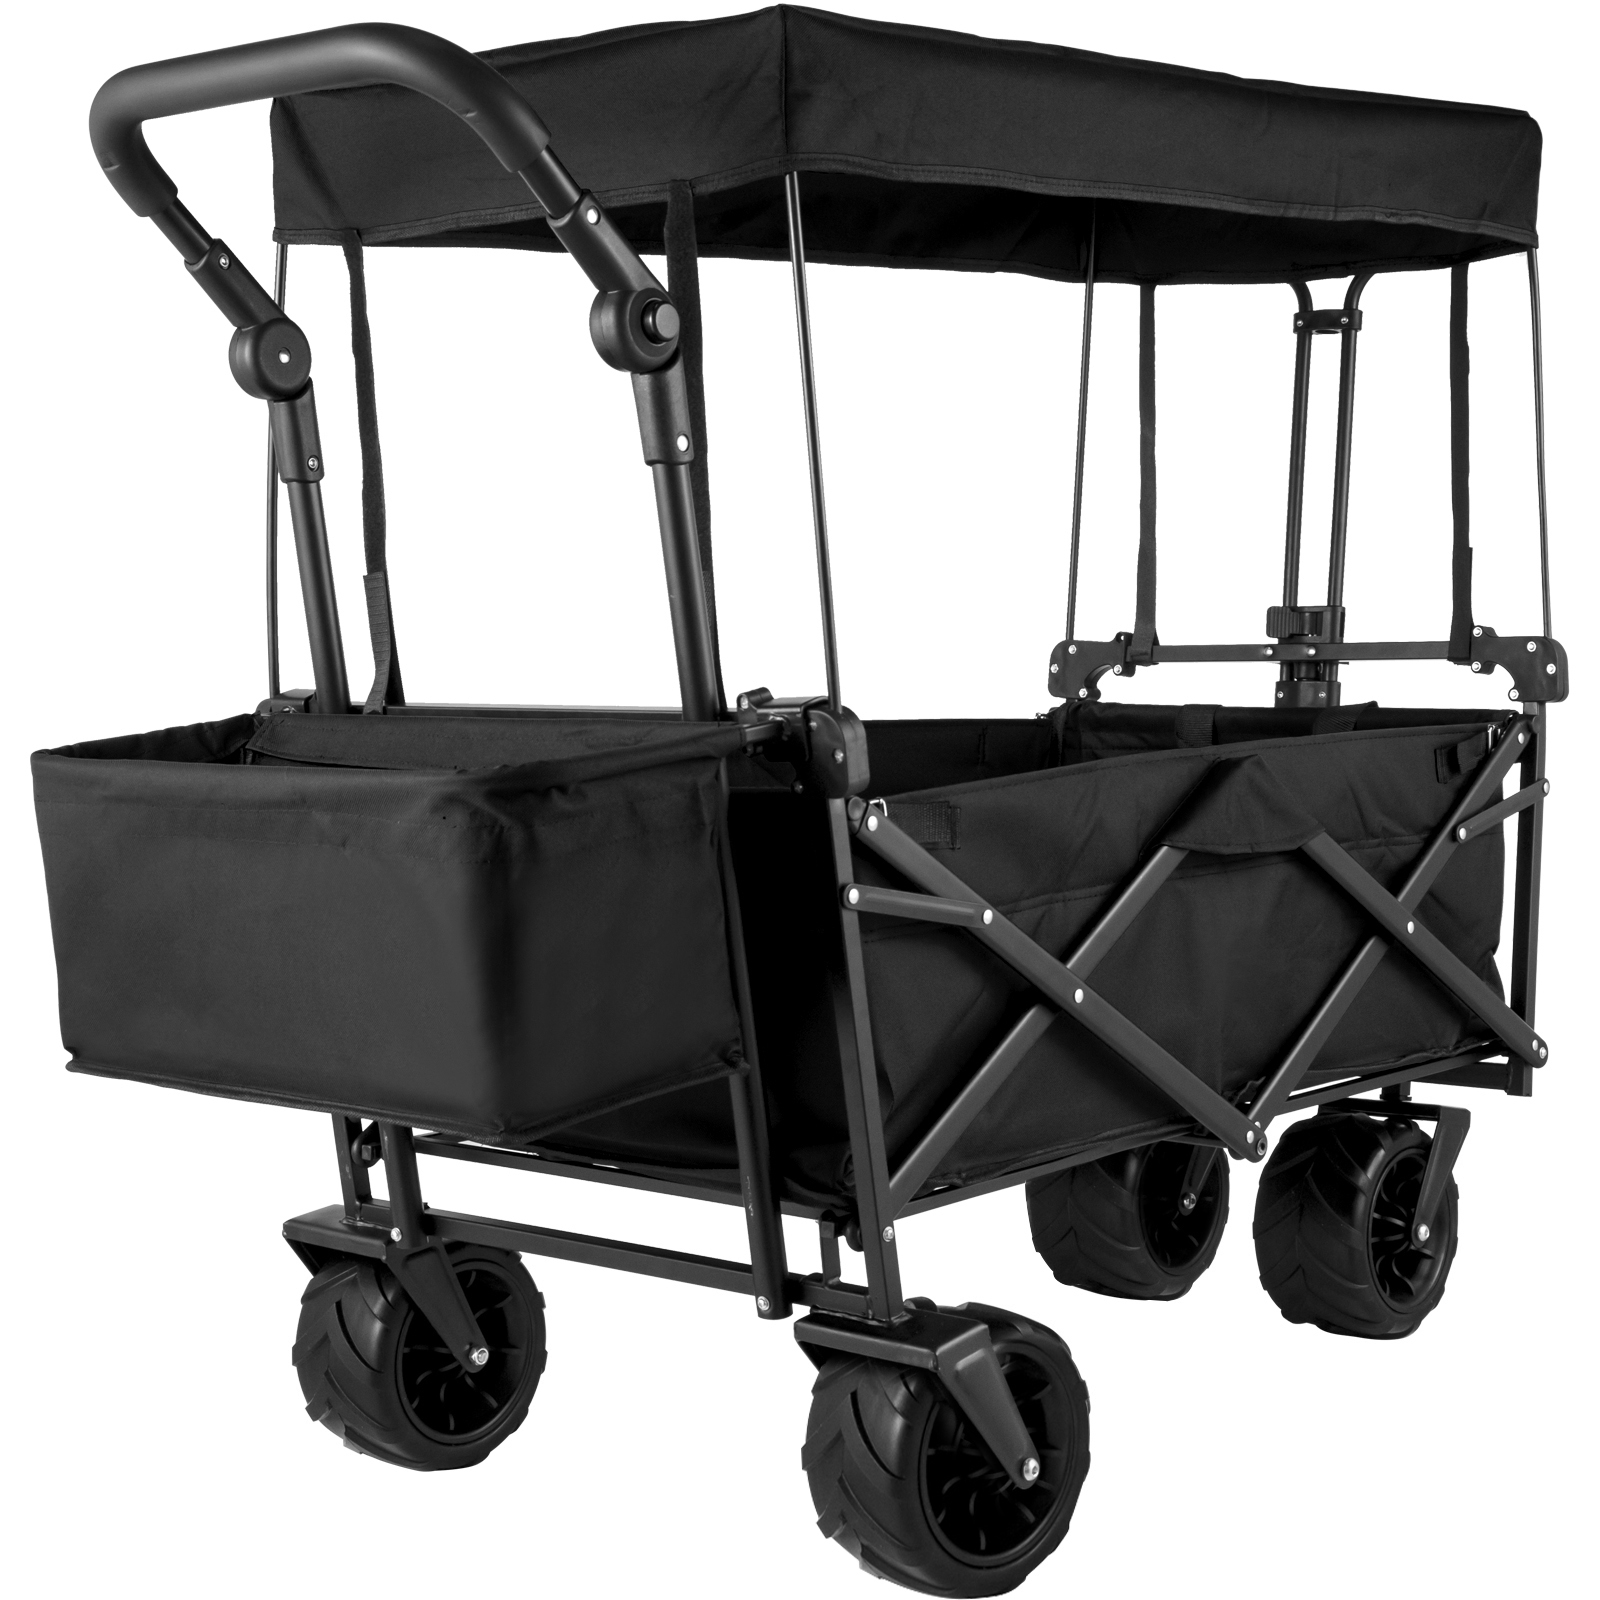 femor Collapsible Folding Outdoor Utility Wagon Heavy Duty Garden Cart for Shopping Beach Outdoors Blue 